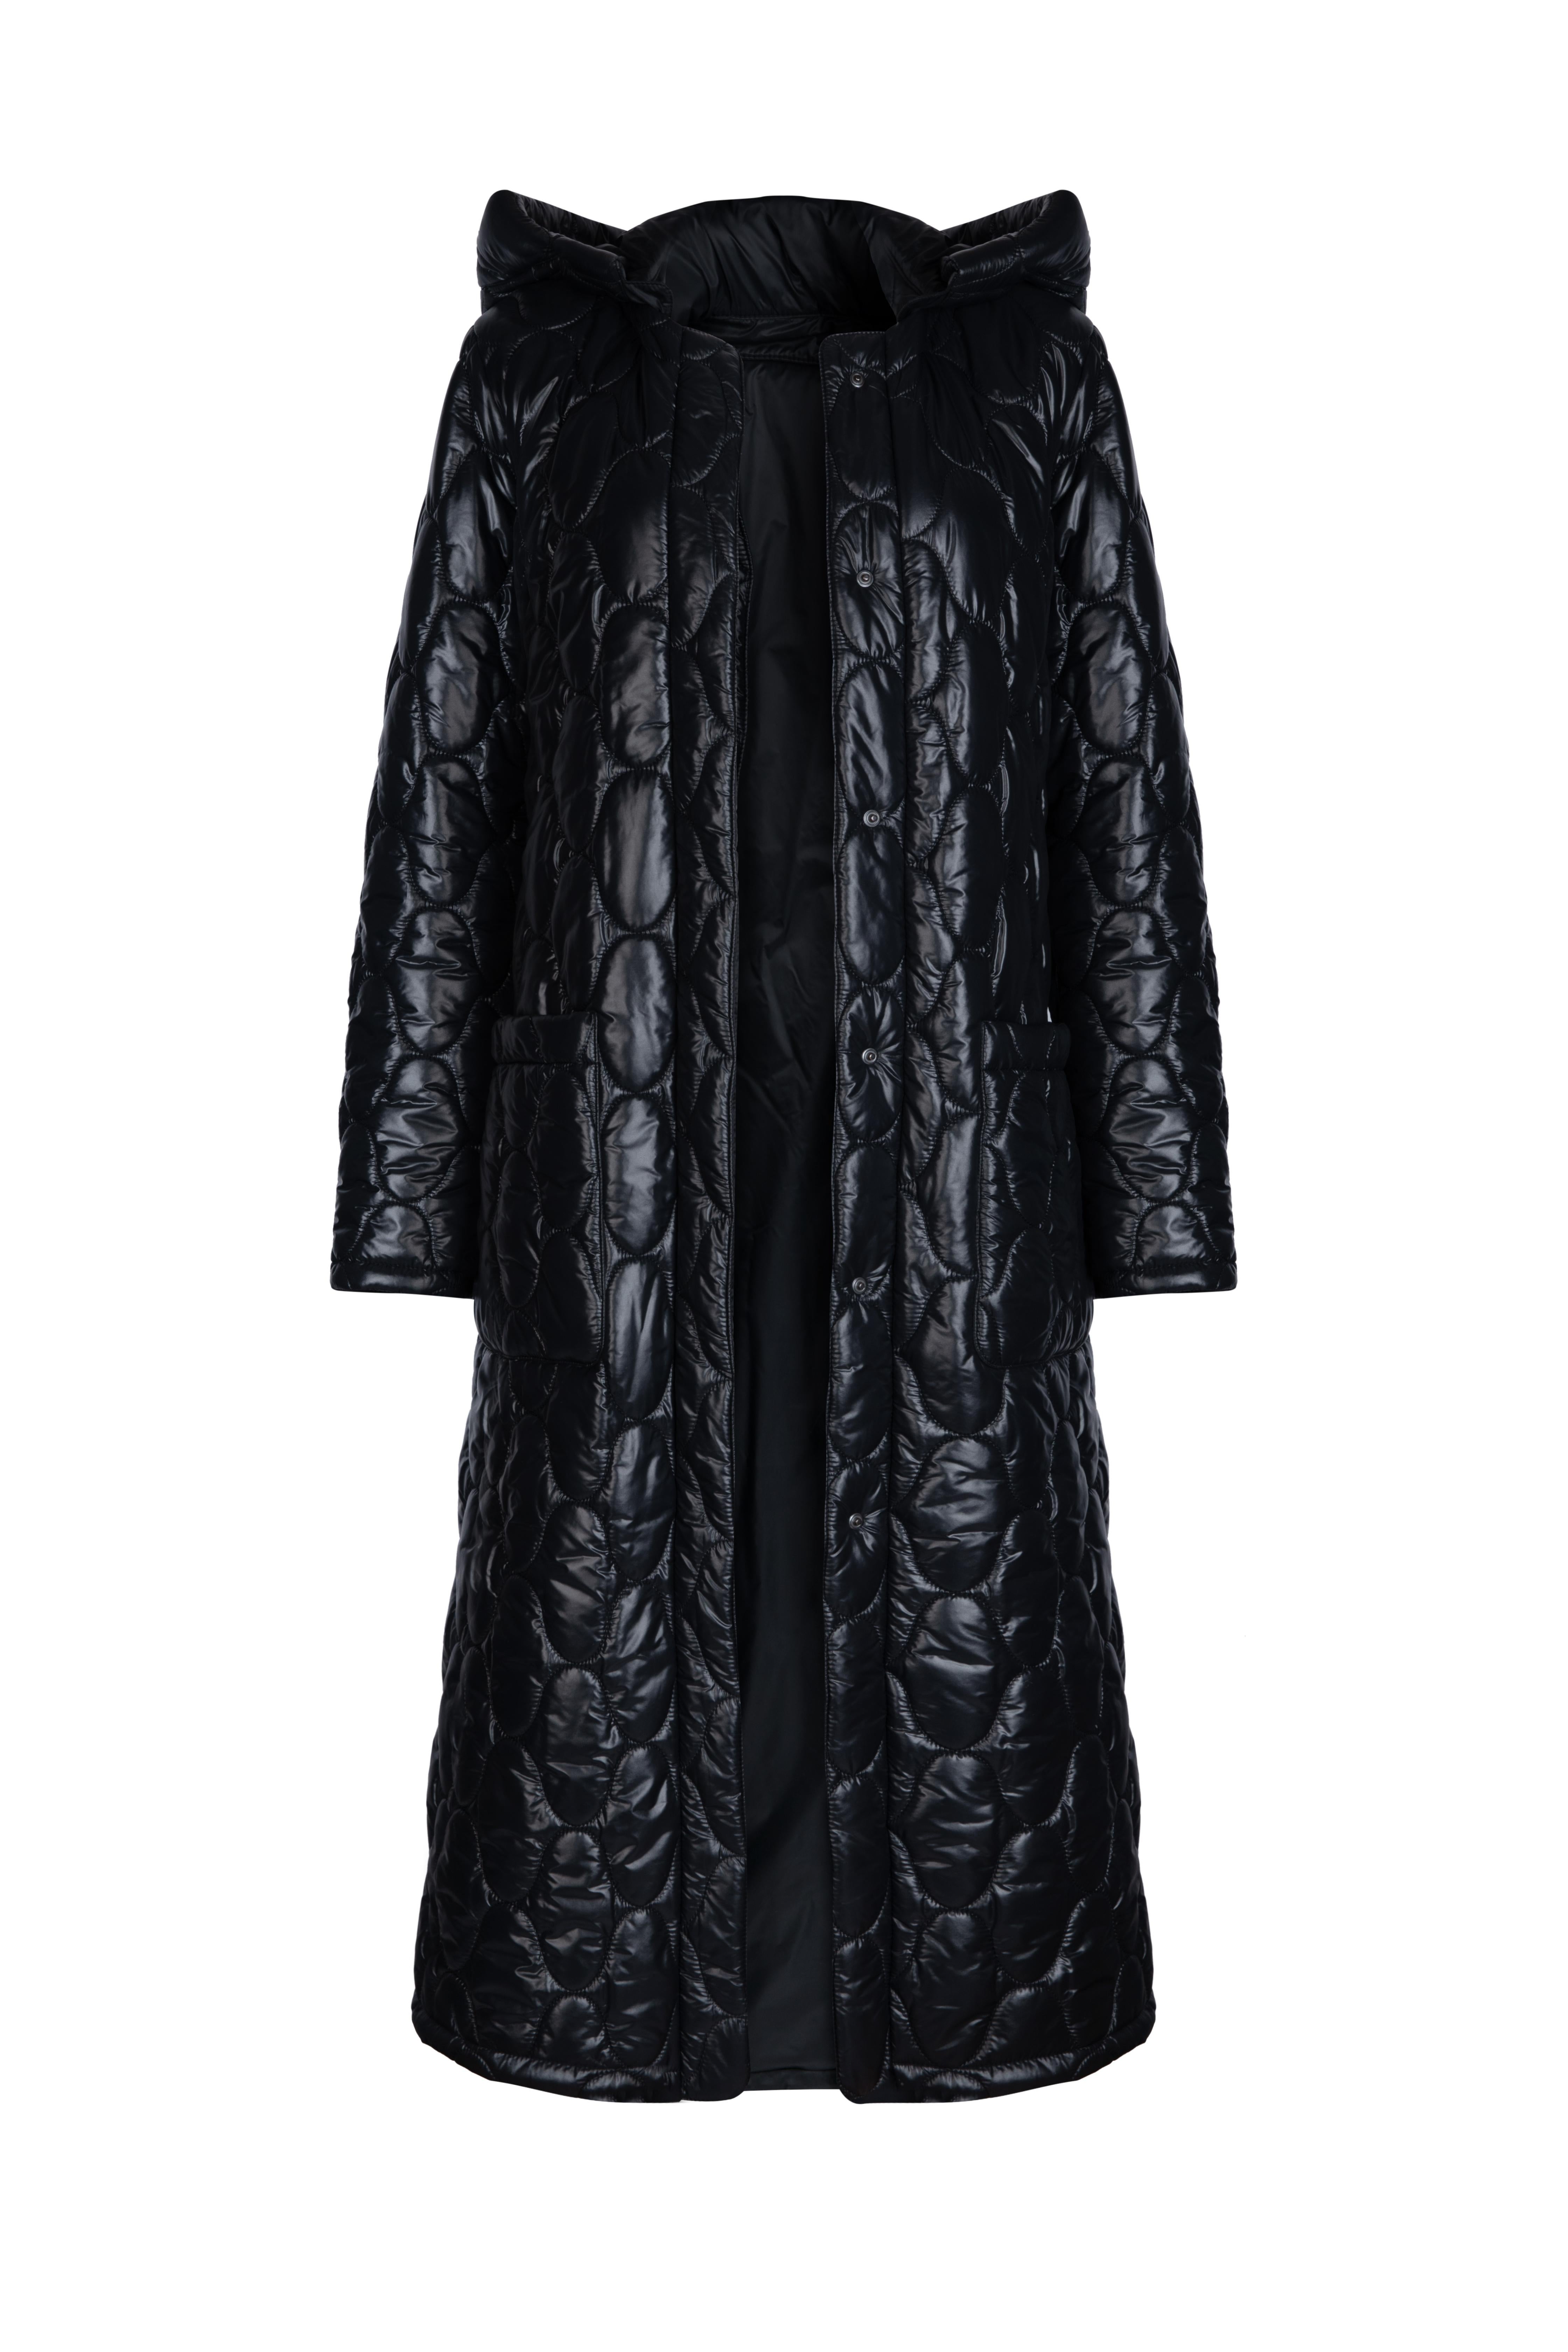 Verheyen London Aurora Quilted Coat with detachable hood - Size uk 8  For Sale 3